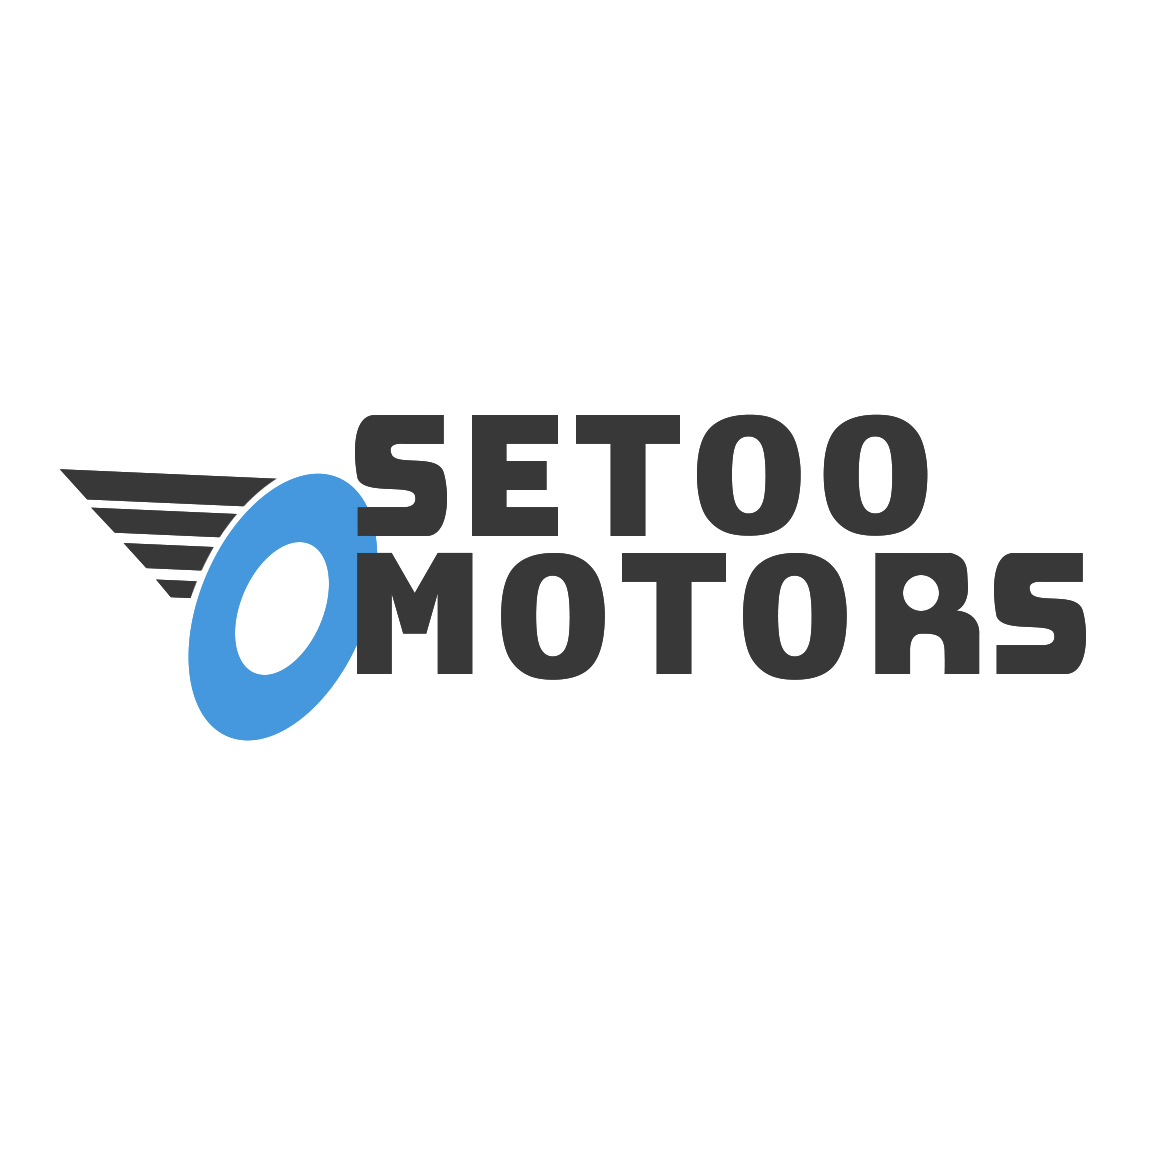 Setoo Motors